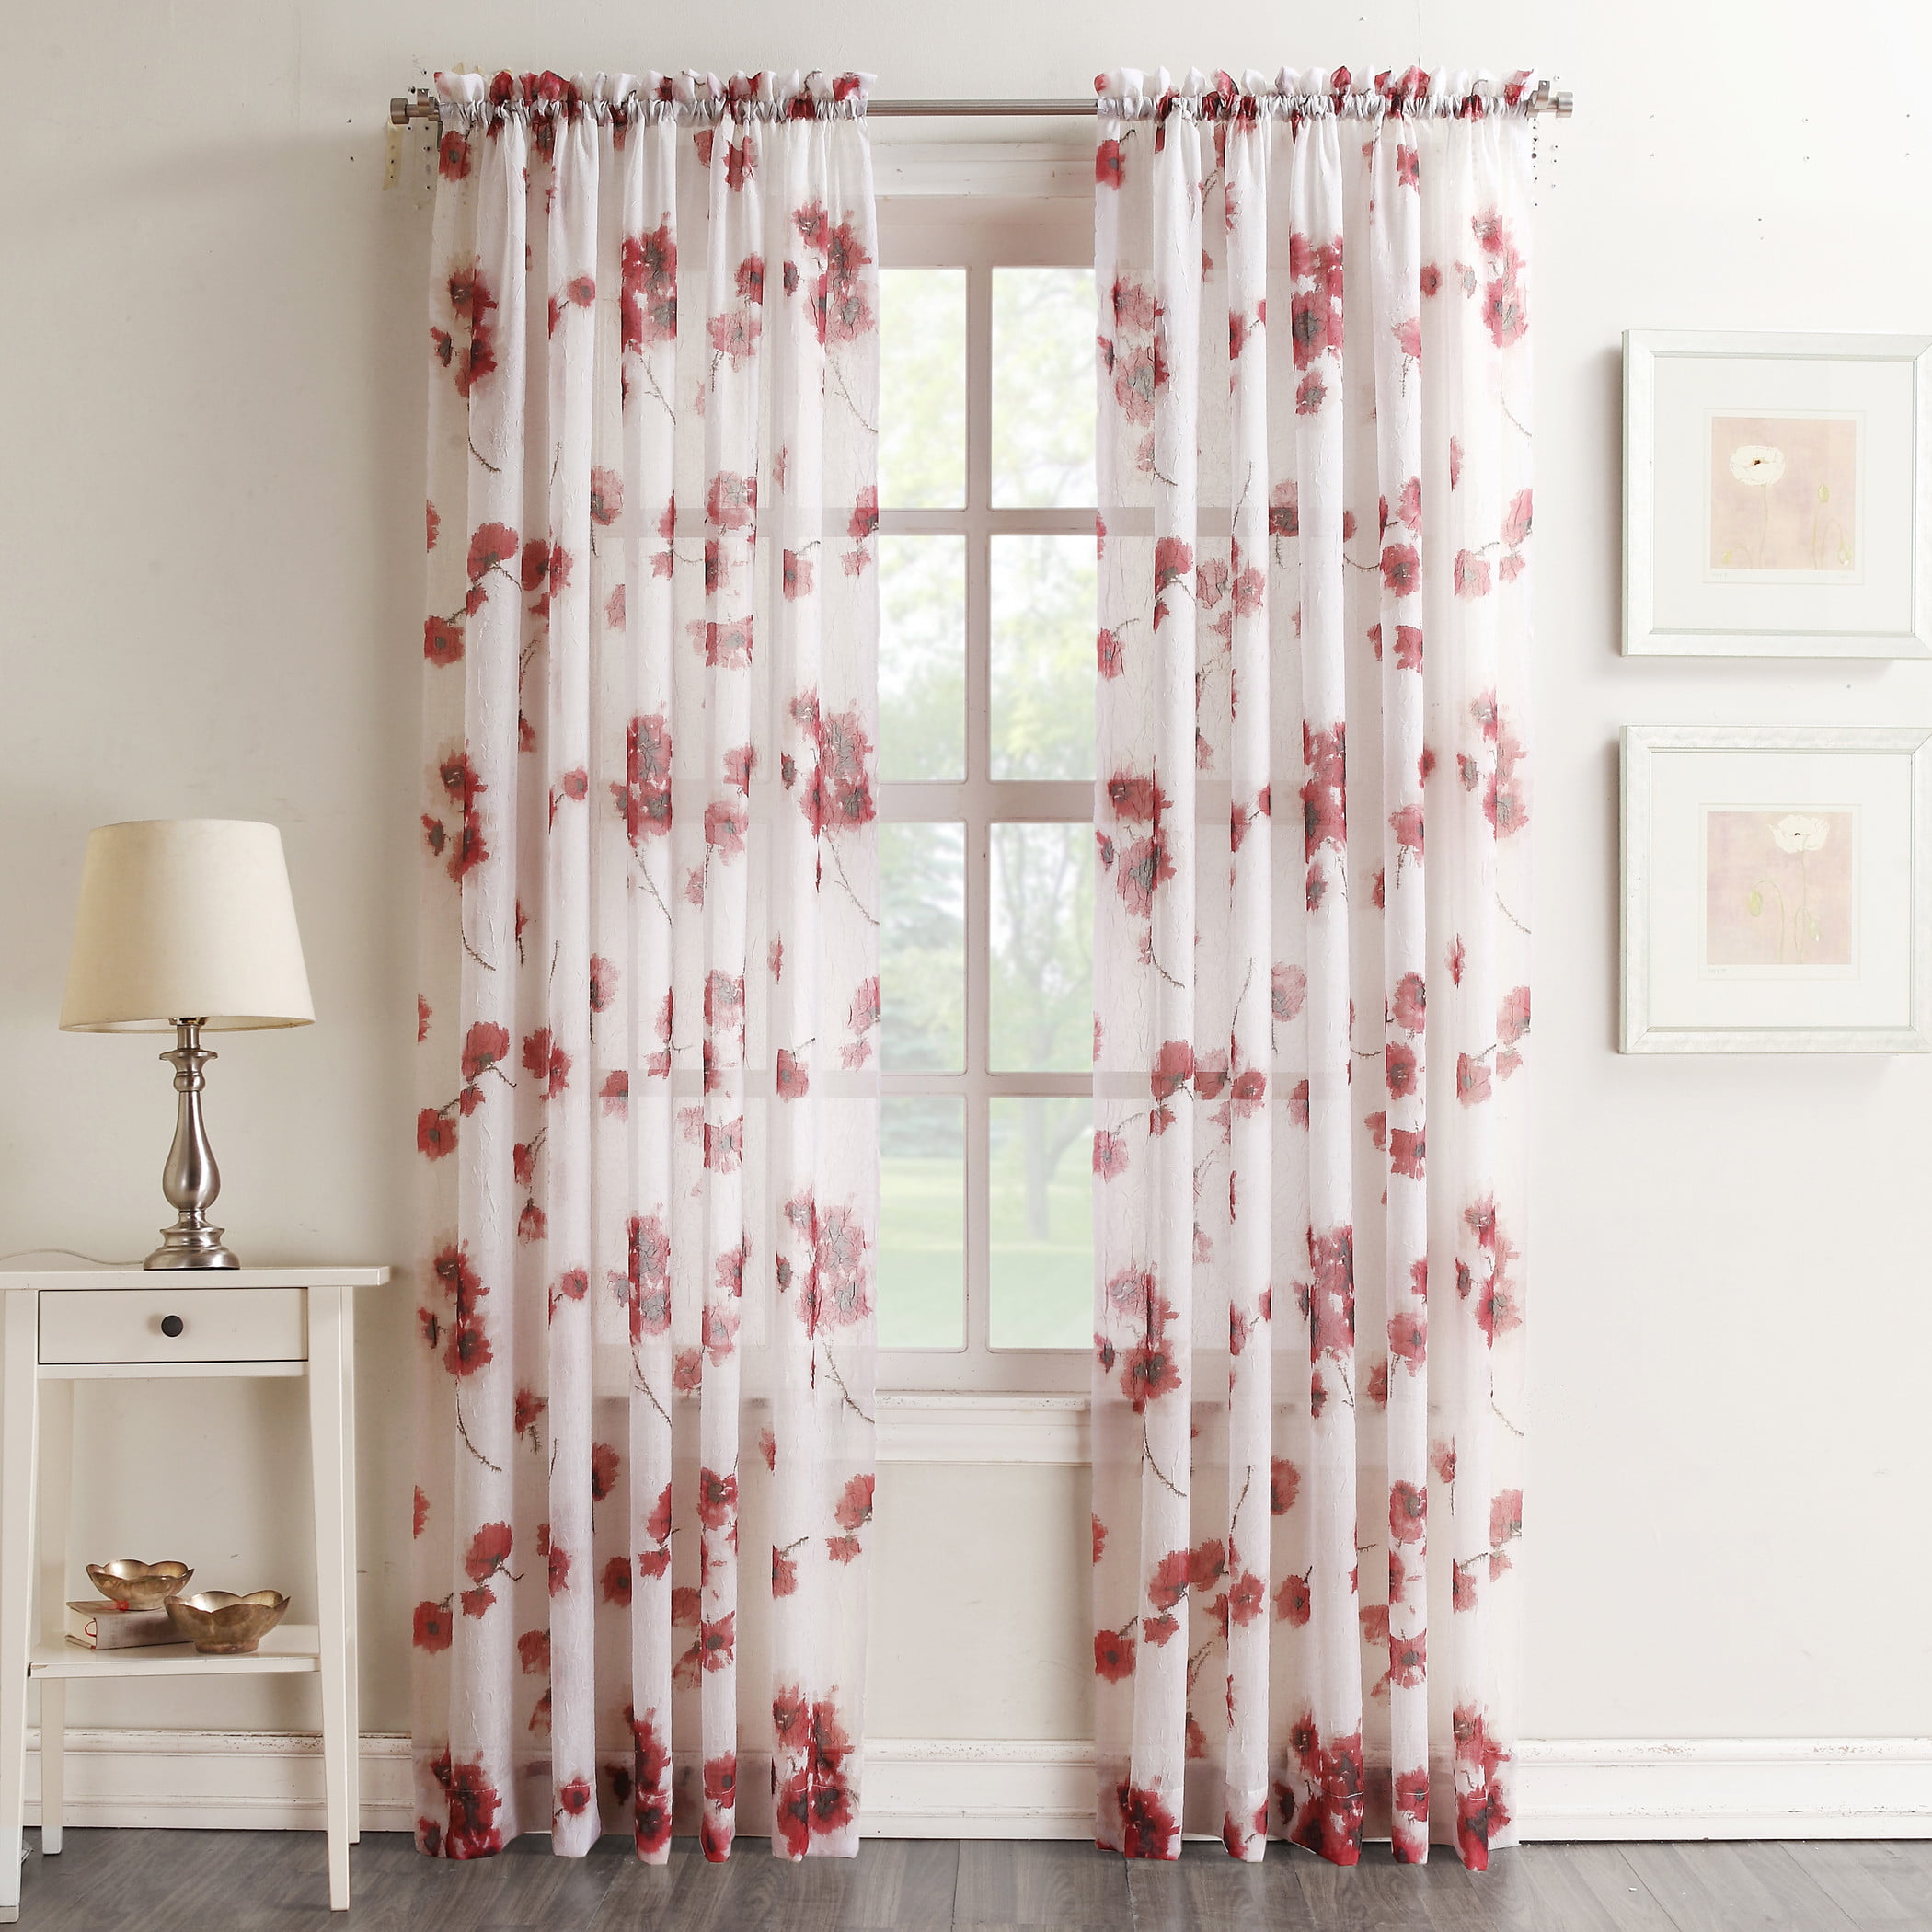 No. 918 Kiki Floral Crushed Voile Sheer Rod Pocket Curtain Panel
Illinois